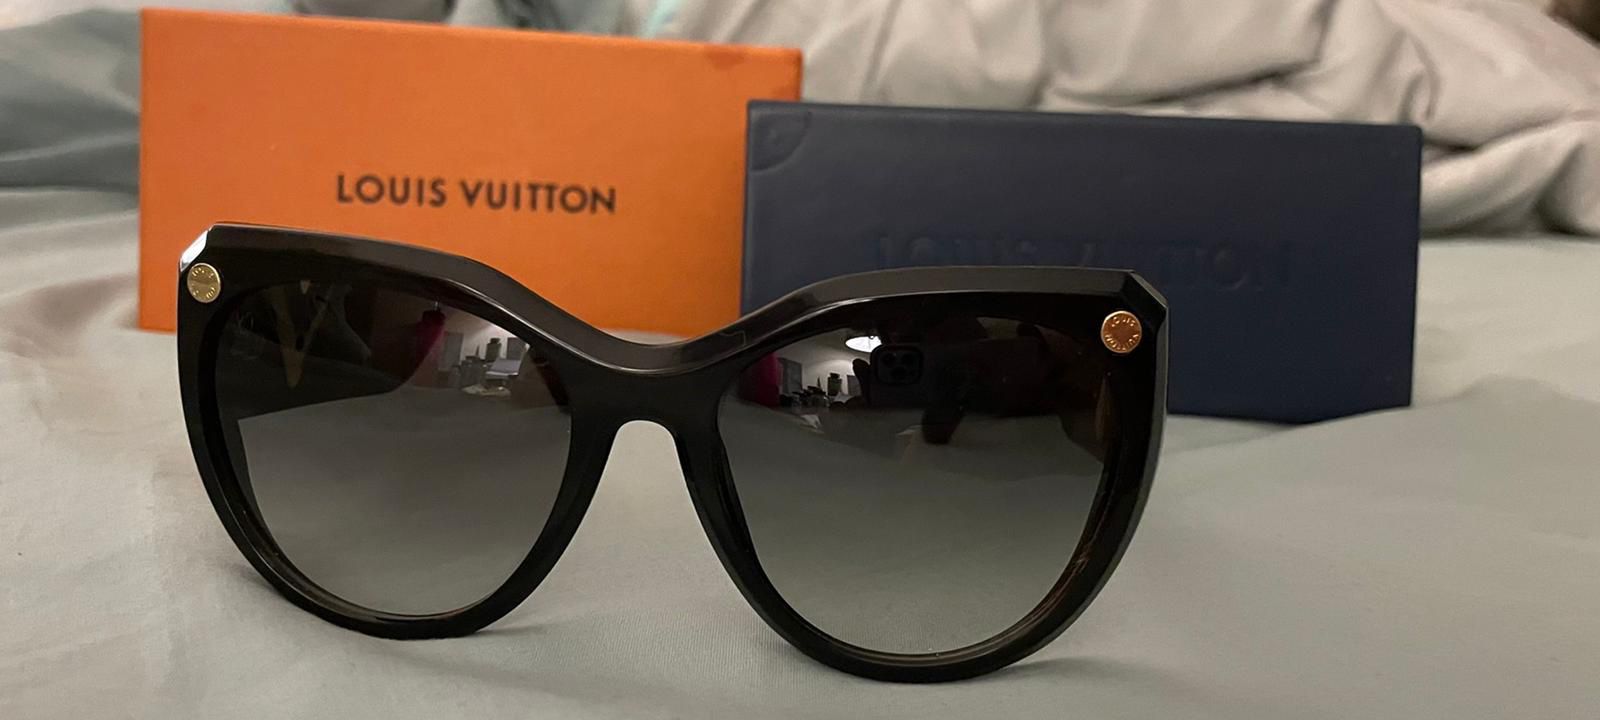 Louis Vuitton My Fair Lady Black Sunglasses Z0902E + Box #59810 - Monty's